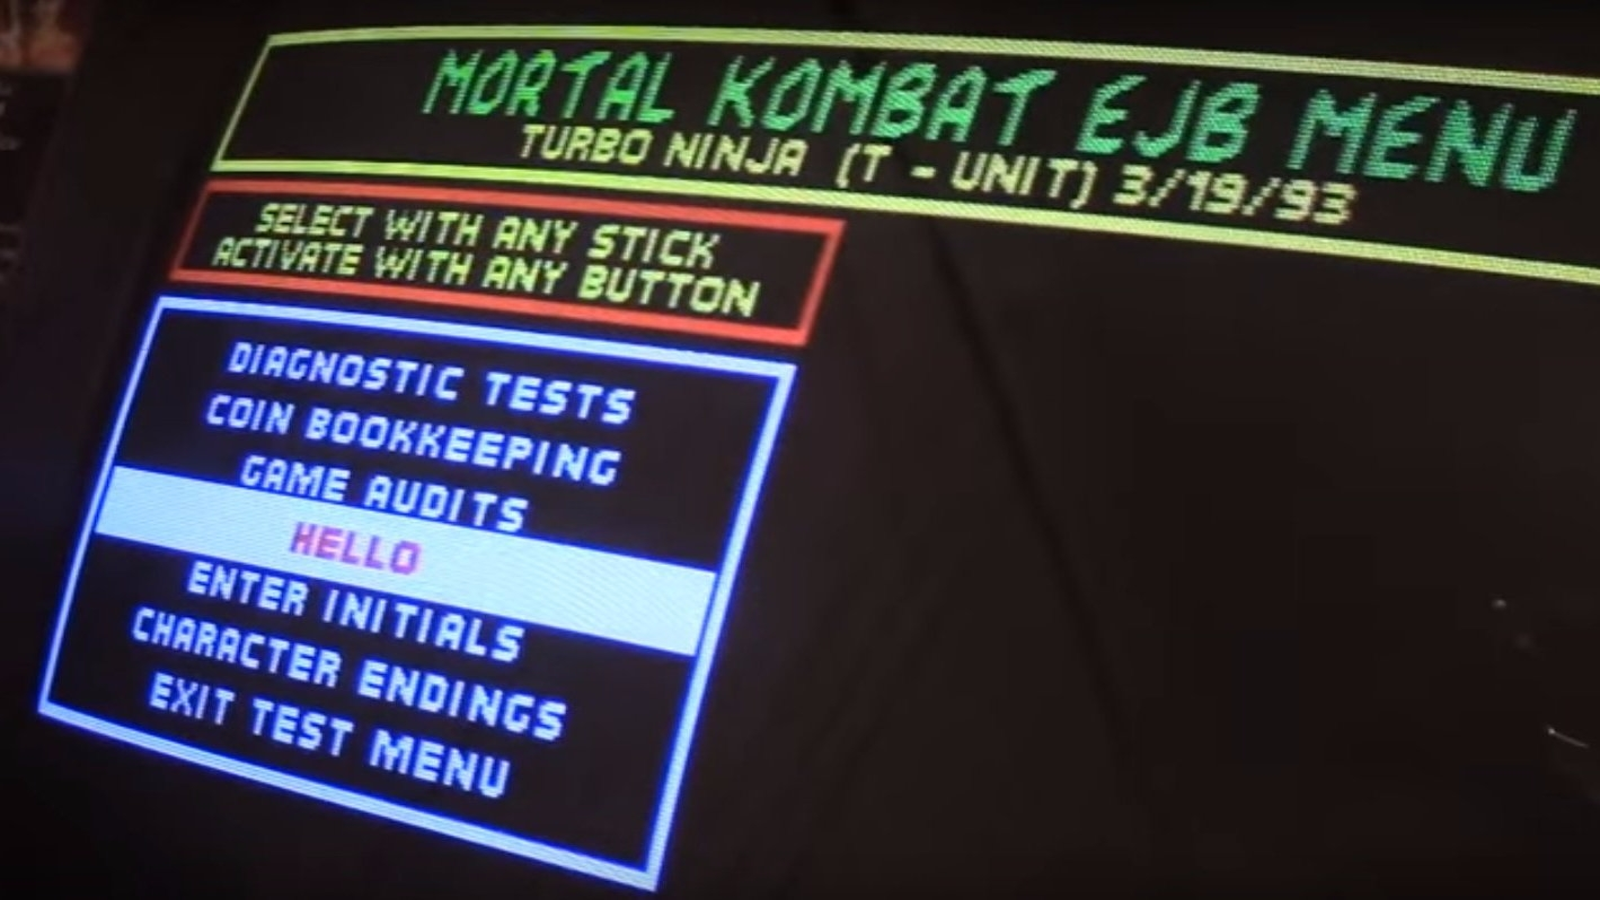 Ultimate Mortal Kombat 3 (Arcade) - The Cutting Room Floor